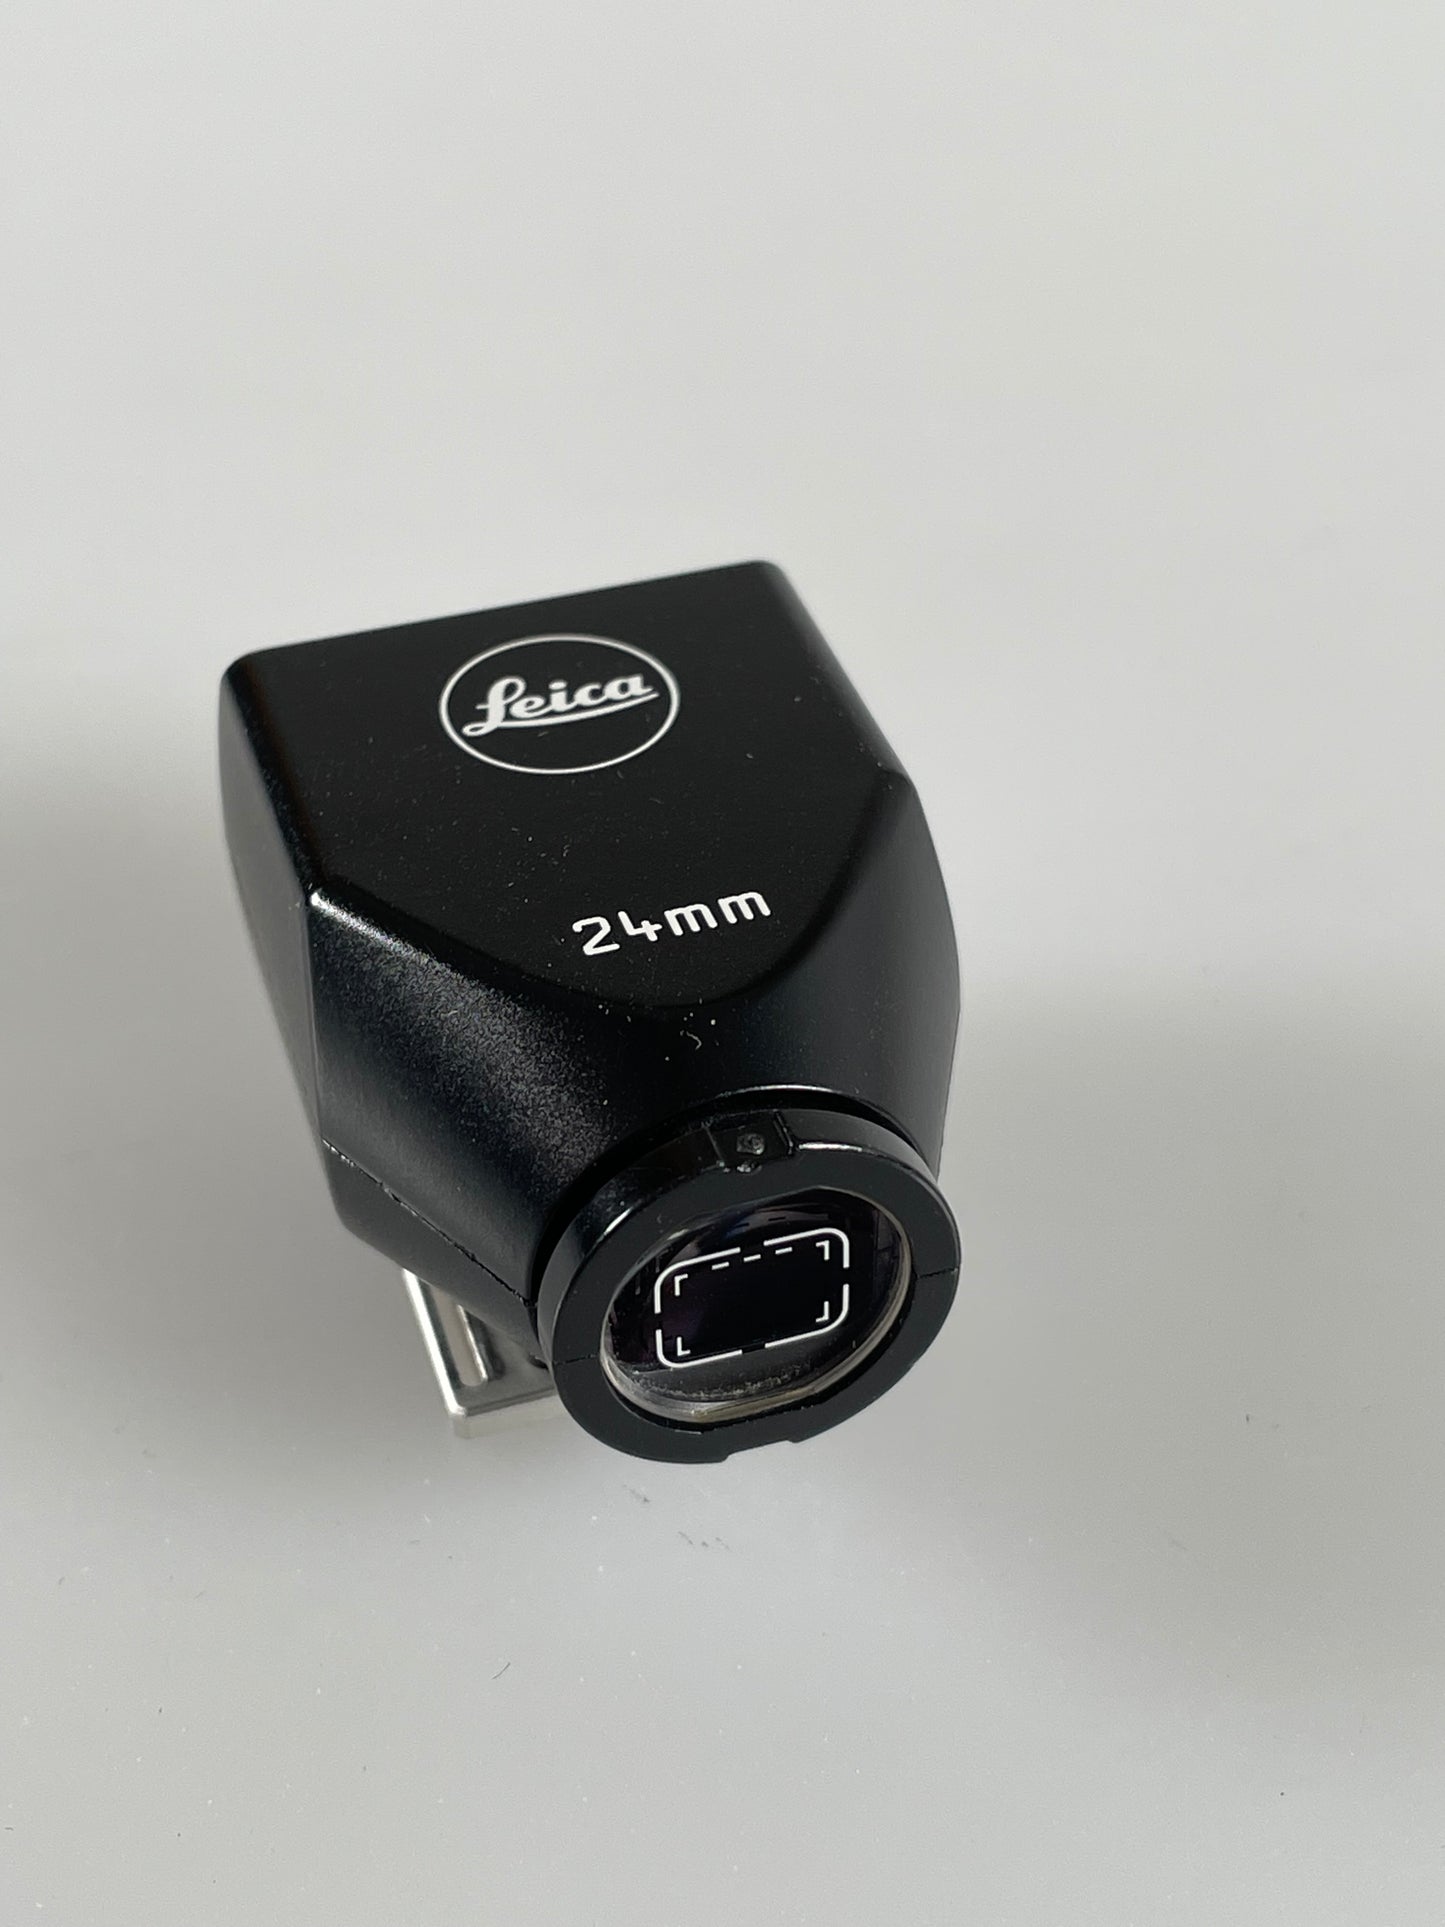 Leica 24mm Bright Line Finder Viewfinder Germany